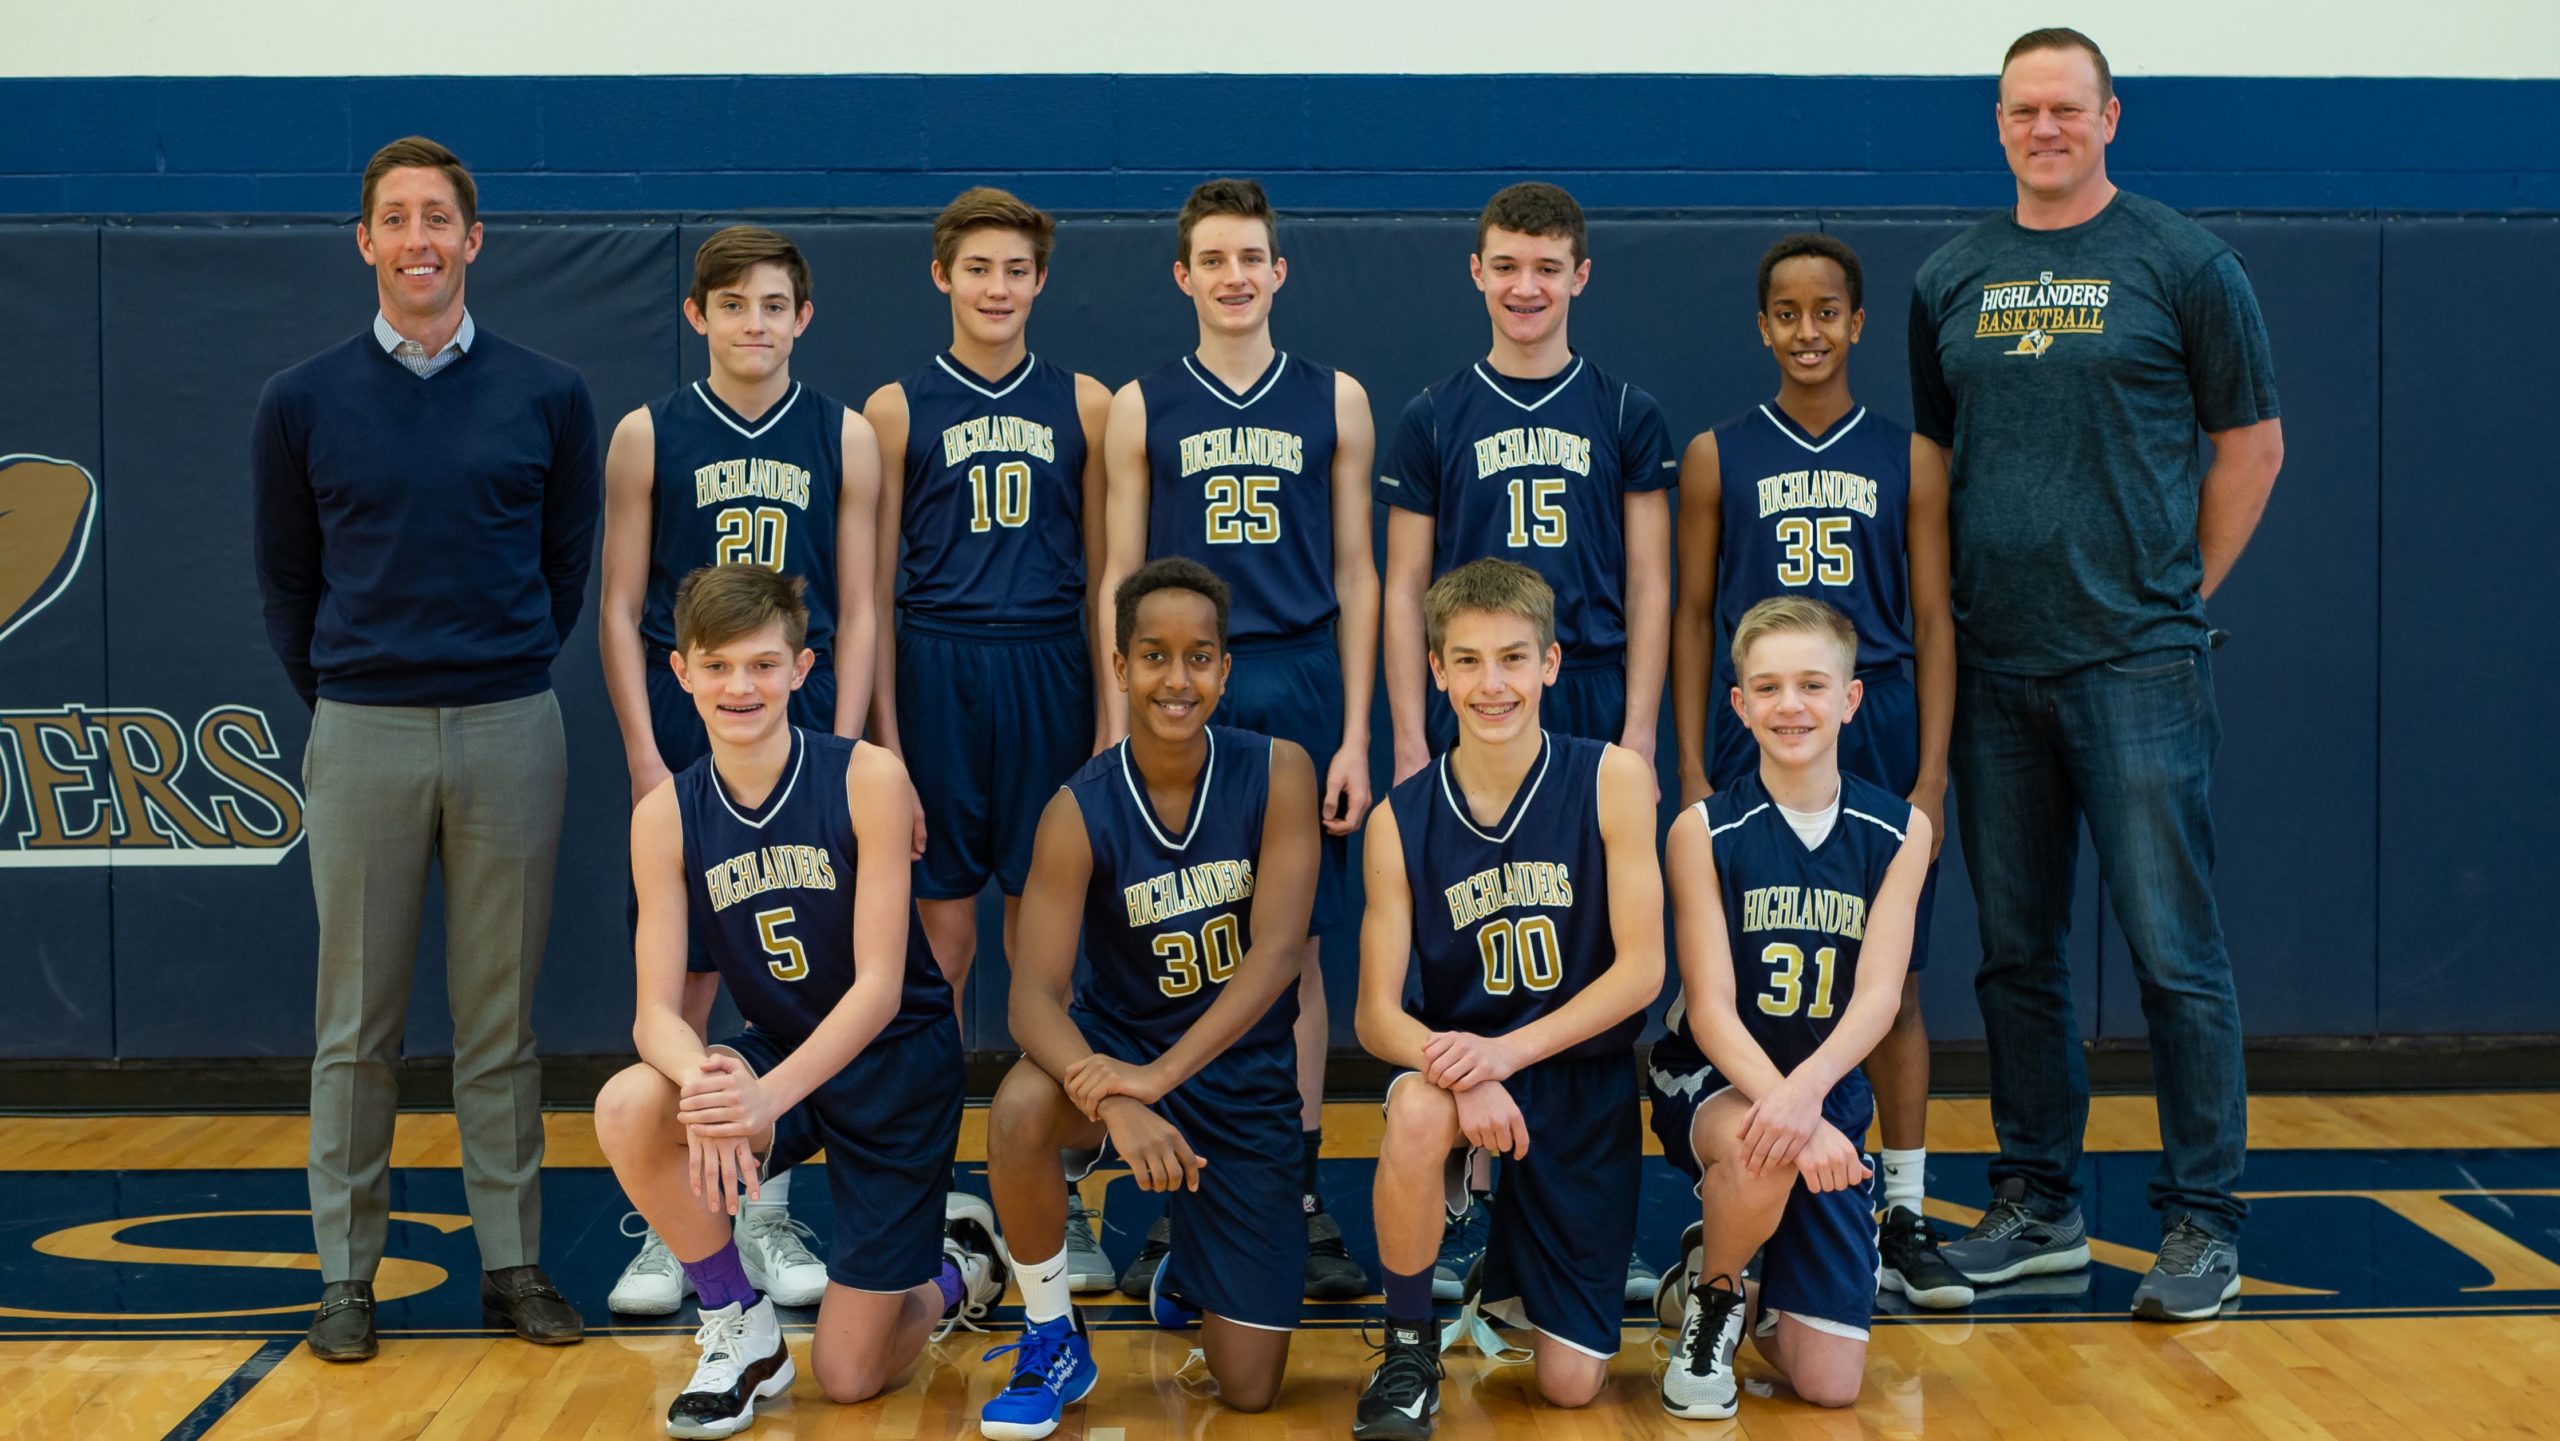 8th Grade Boys Basketball Team Photo